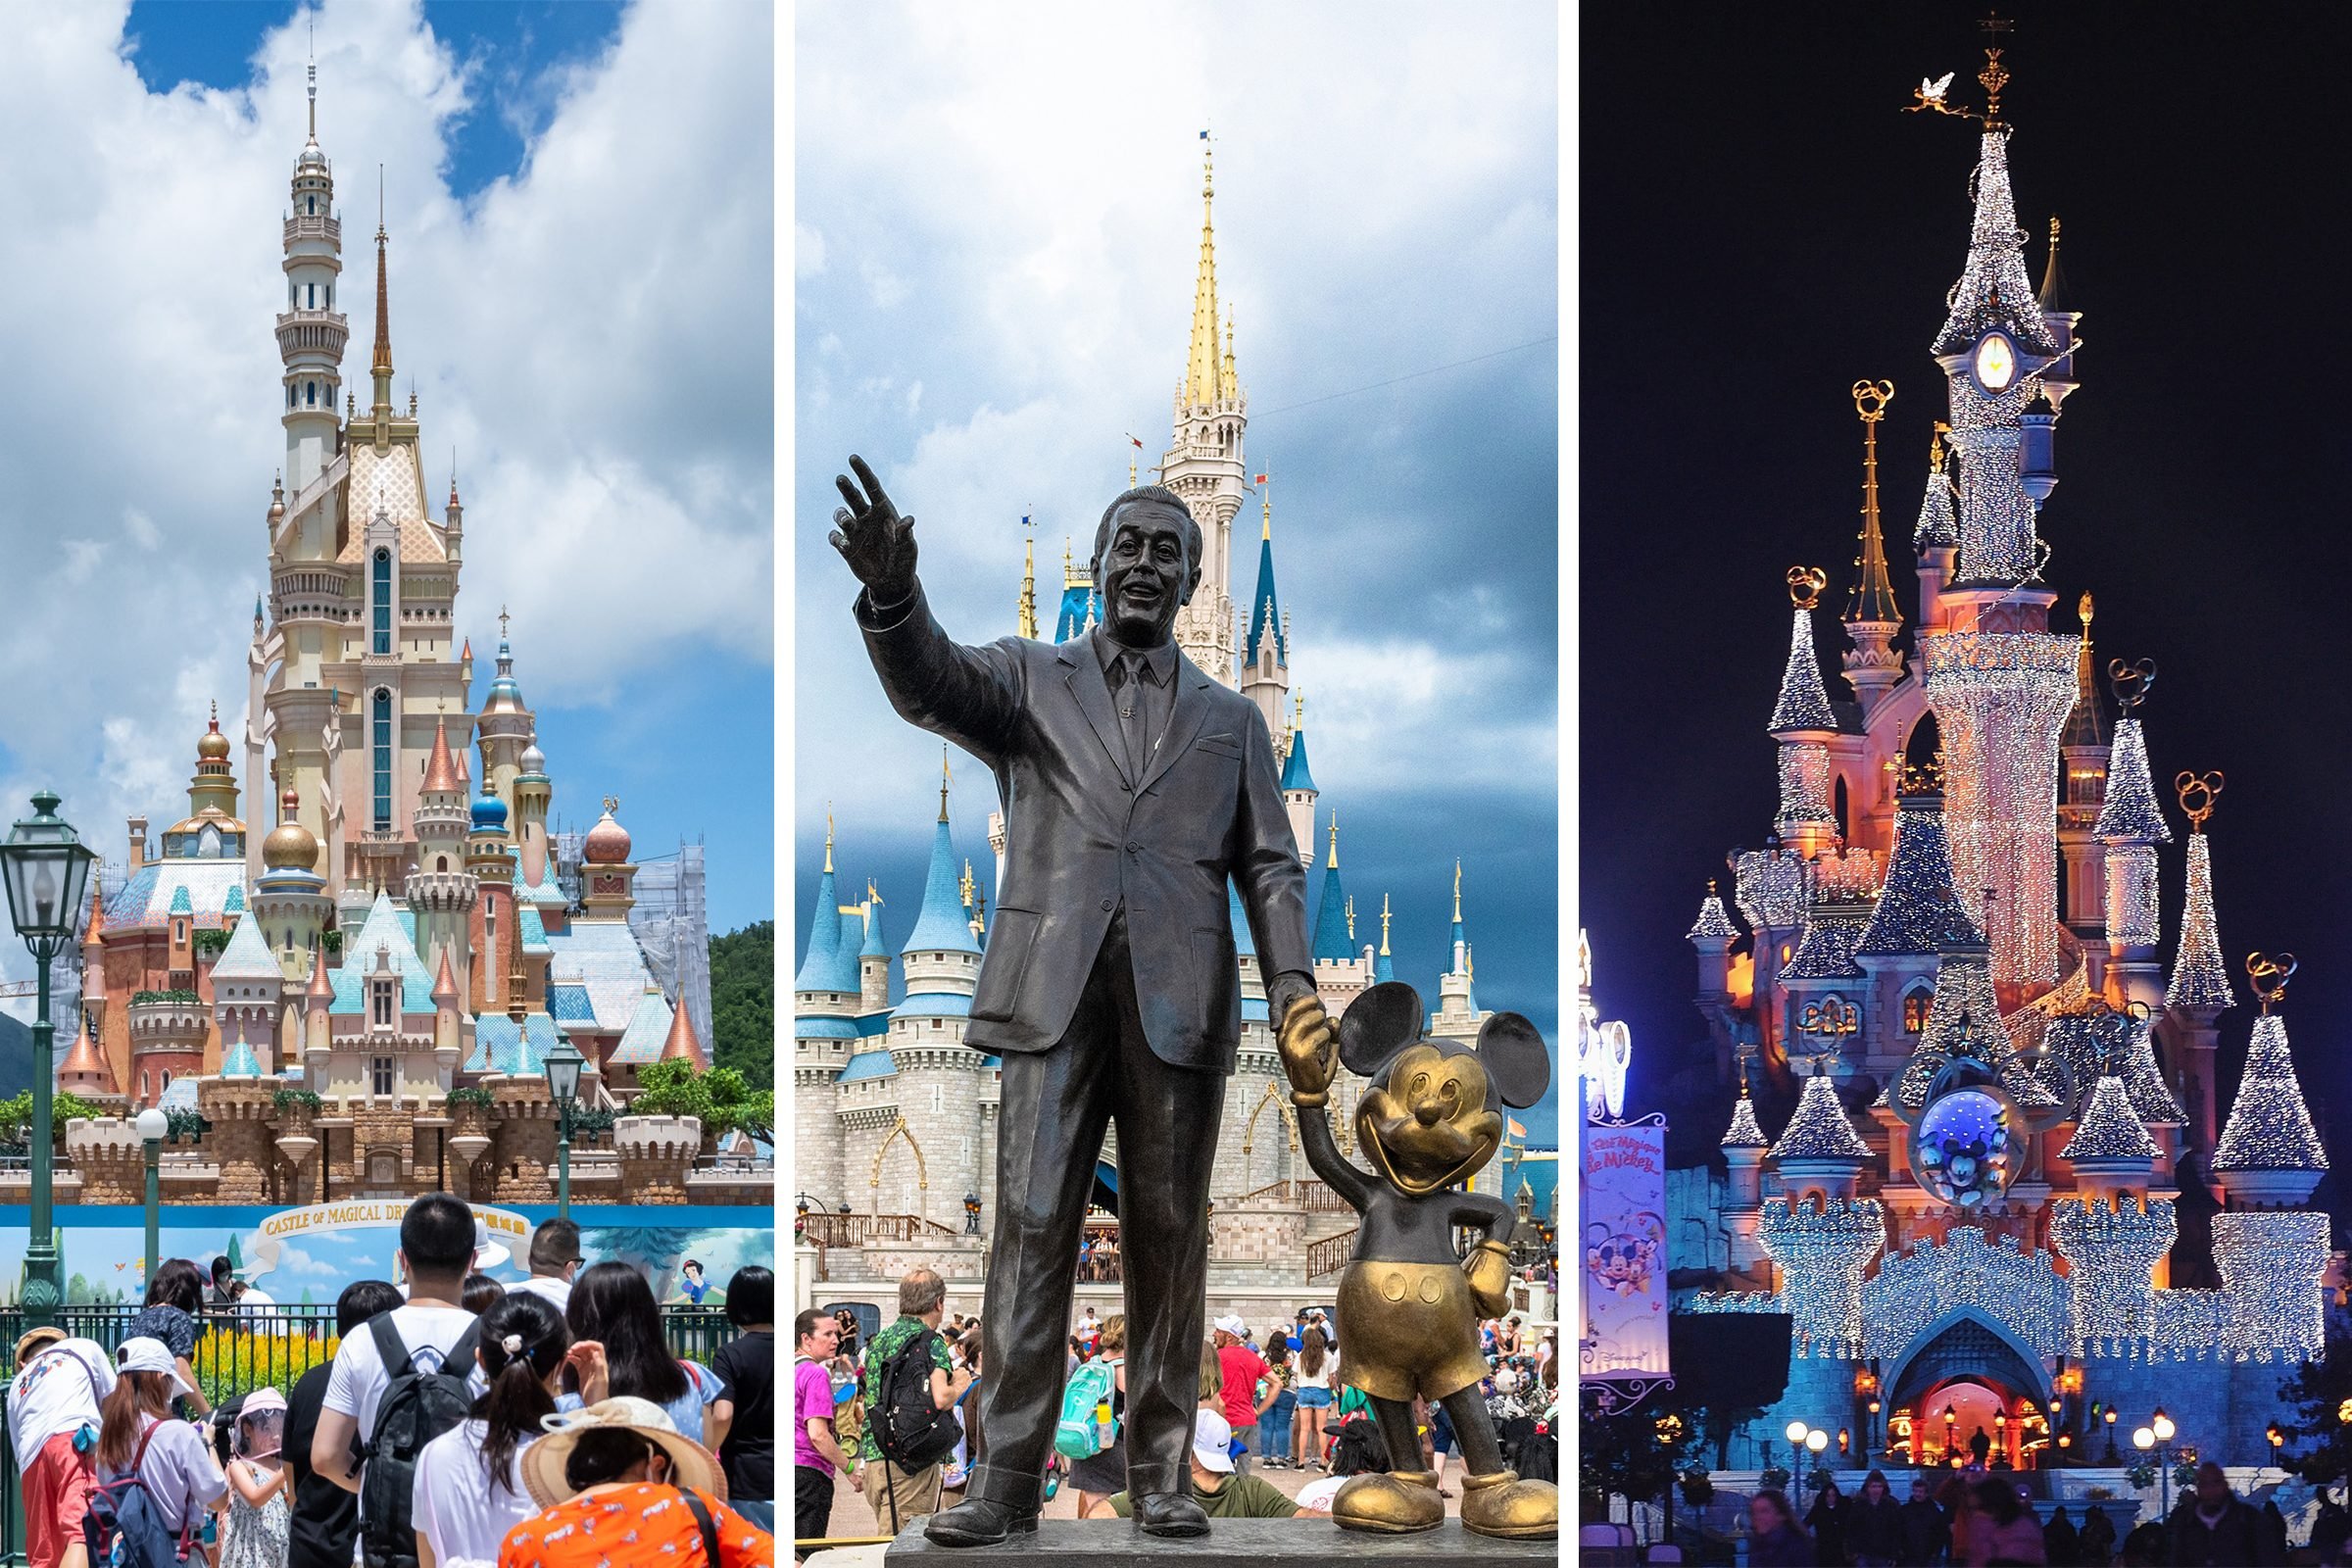 How to Make Park Reservations for Disney World - Disney Tourist Blog